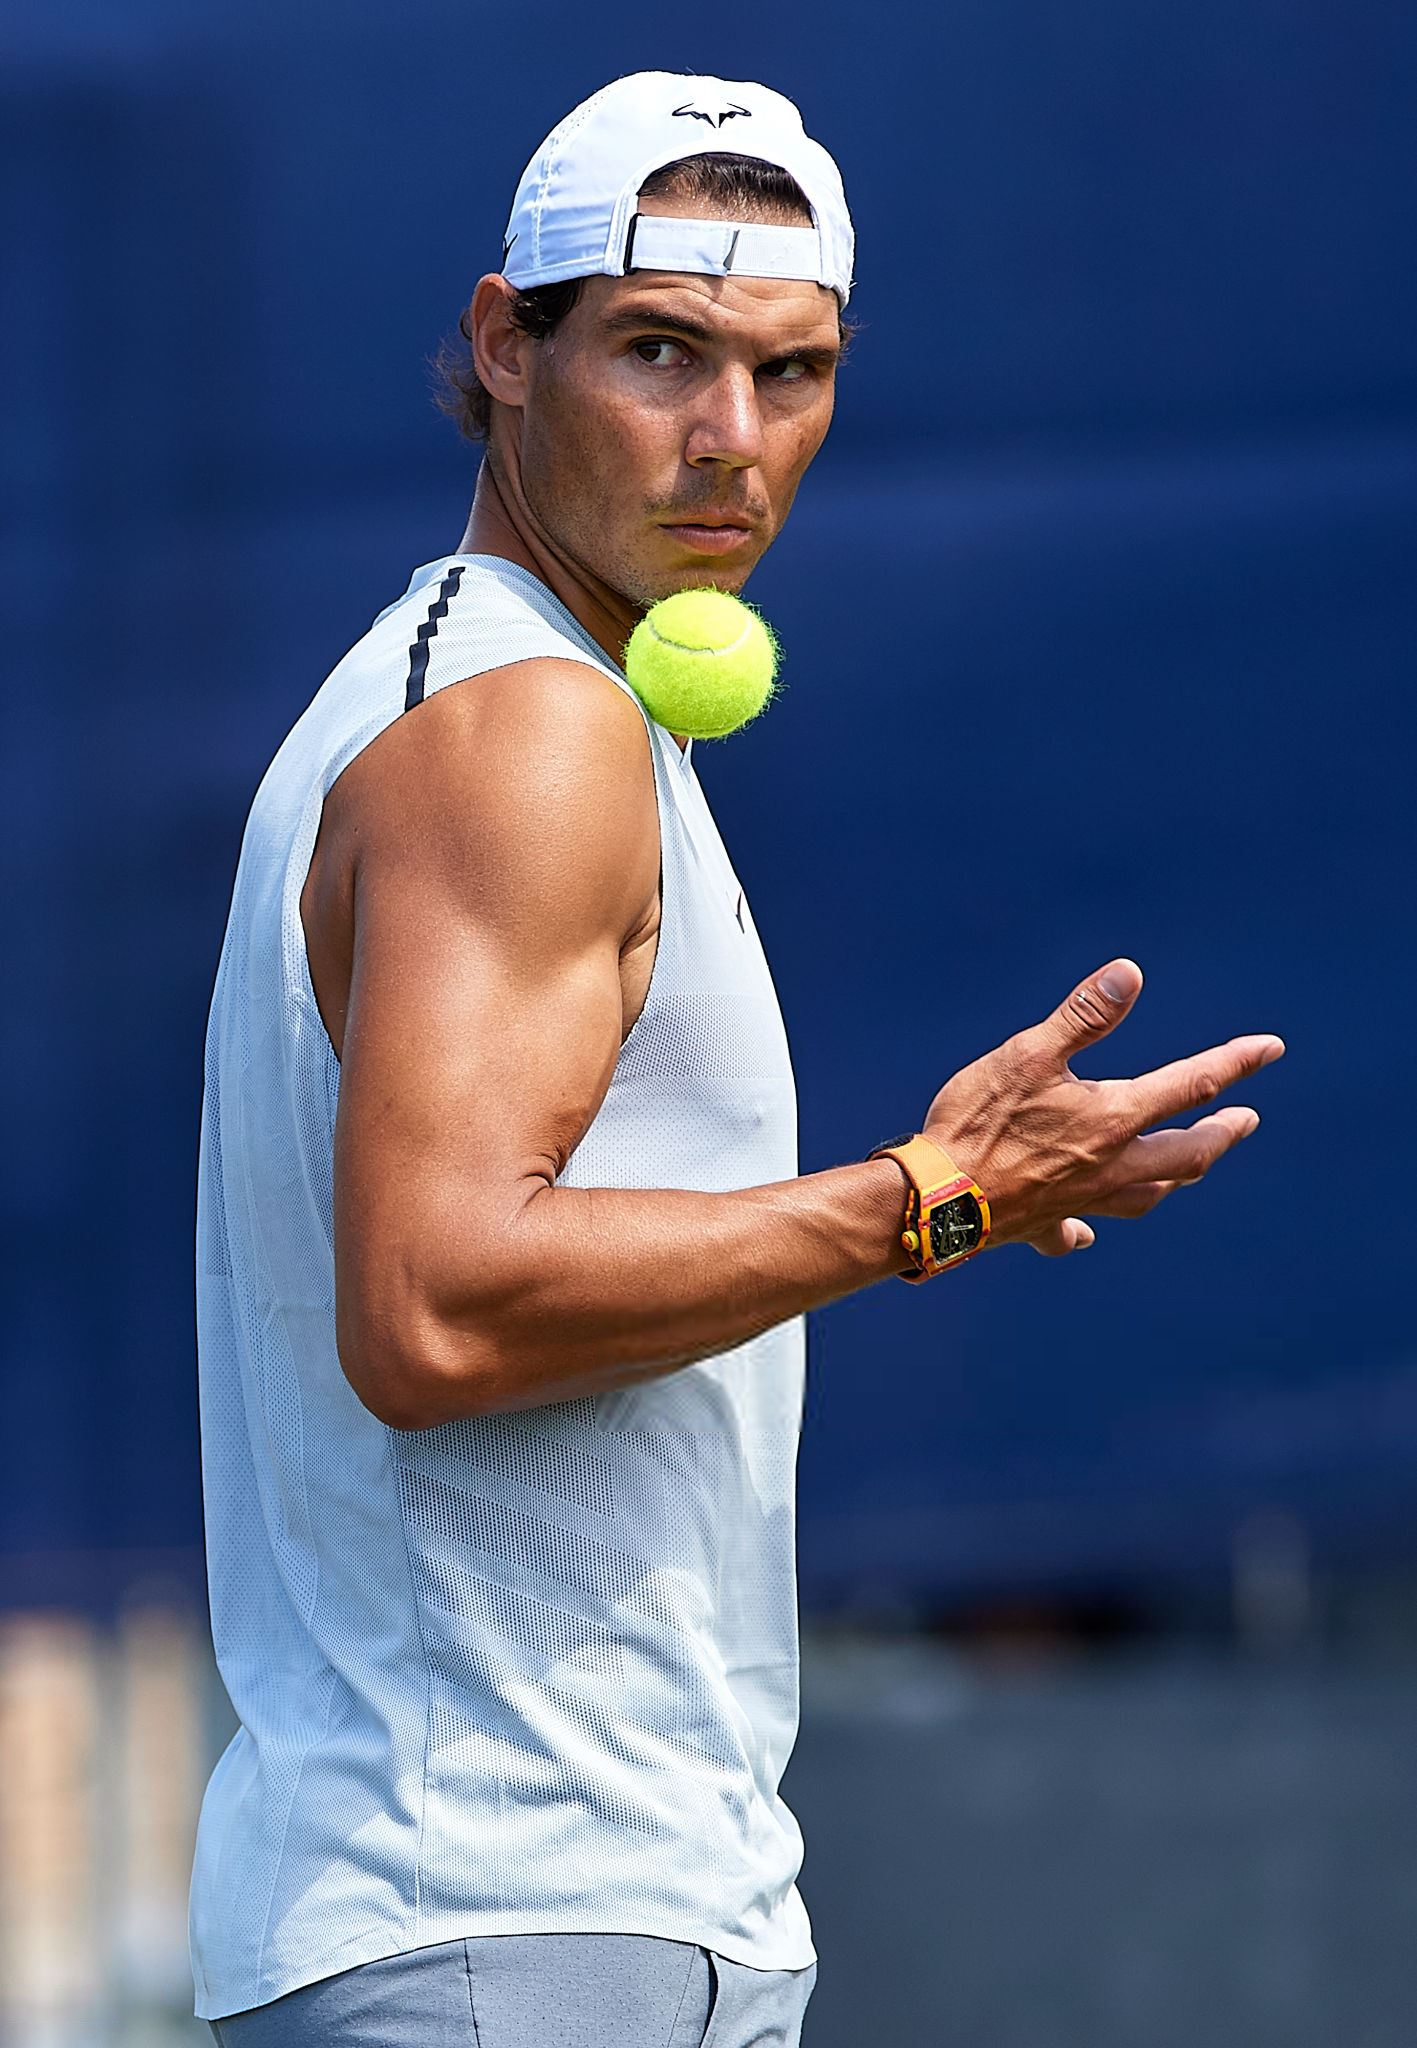 Rafael Nadal’s first training on grass in Mallorca – Rafael Nadal Fans1417 x 2048